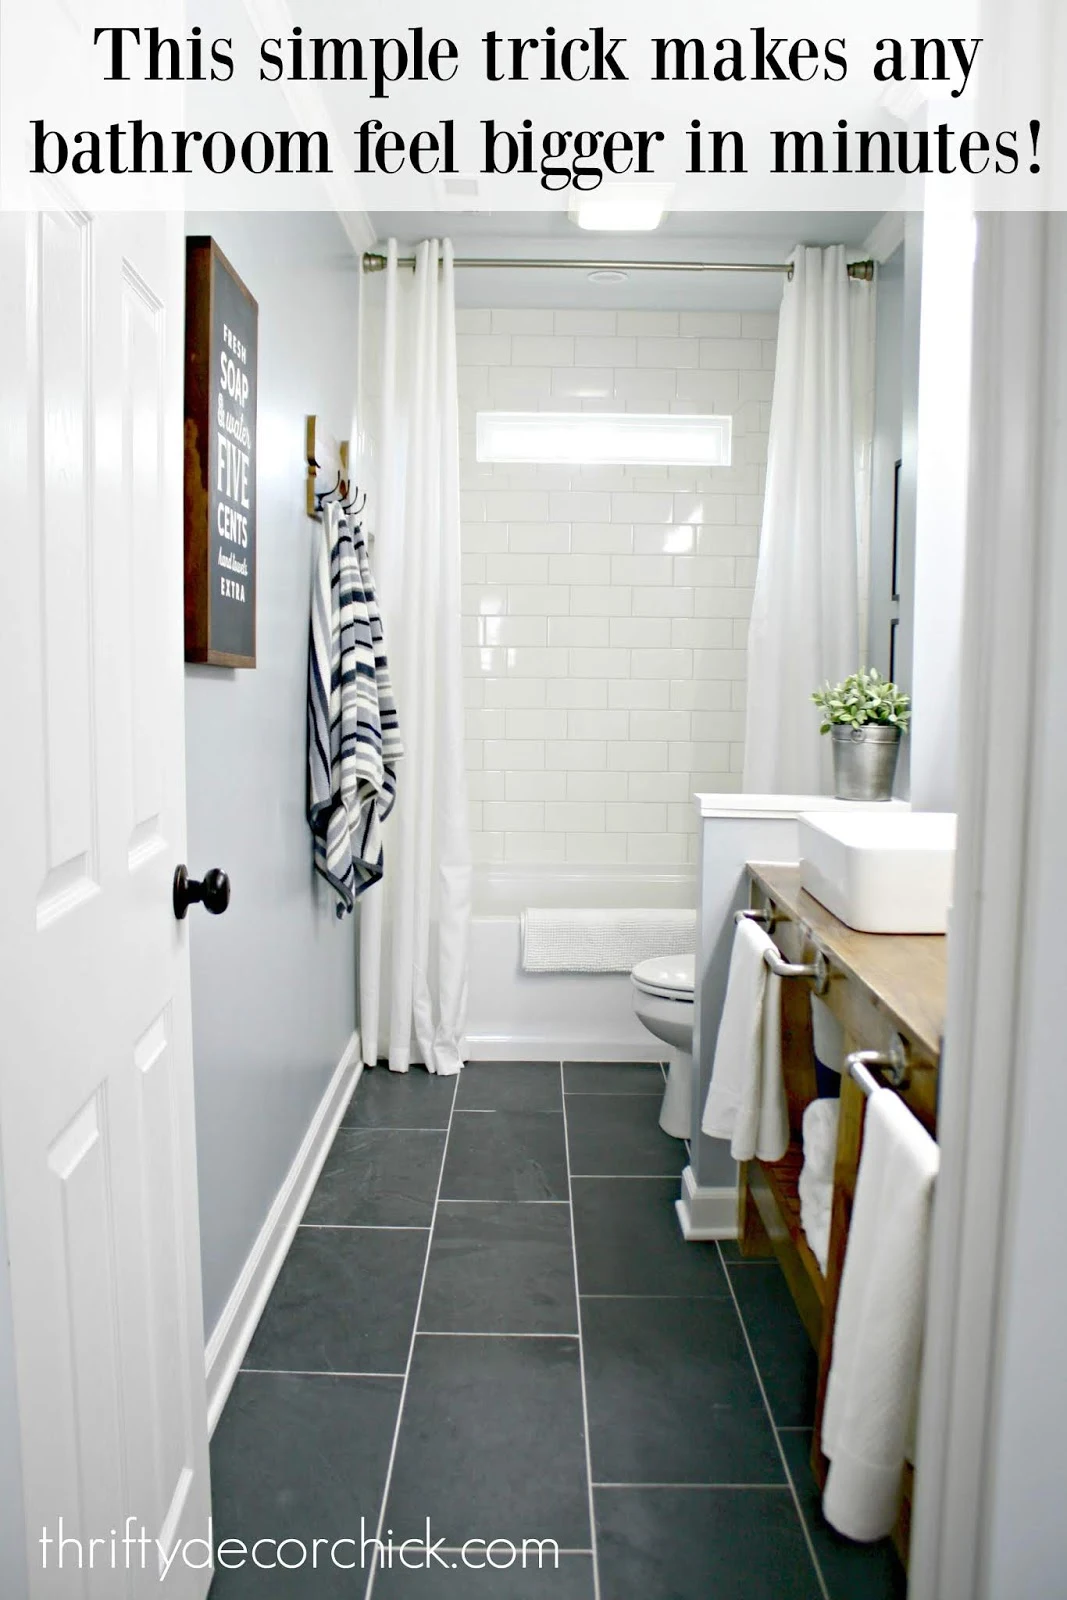 Raise shower curtain to make bathroom feel bigger